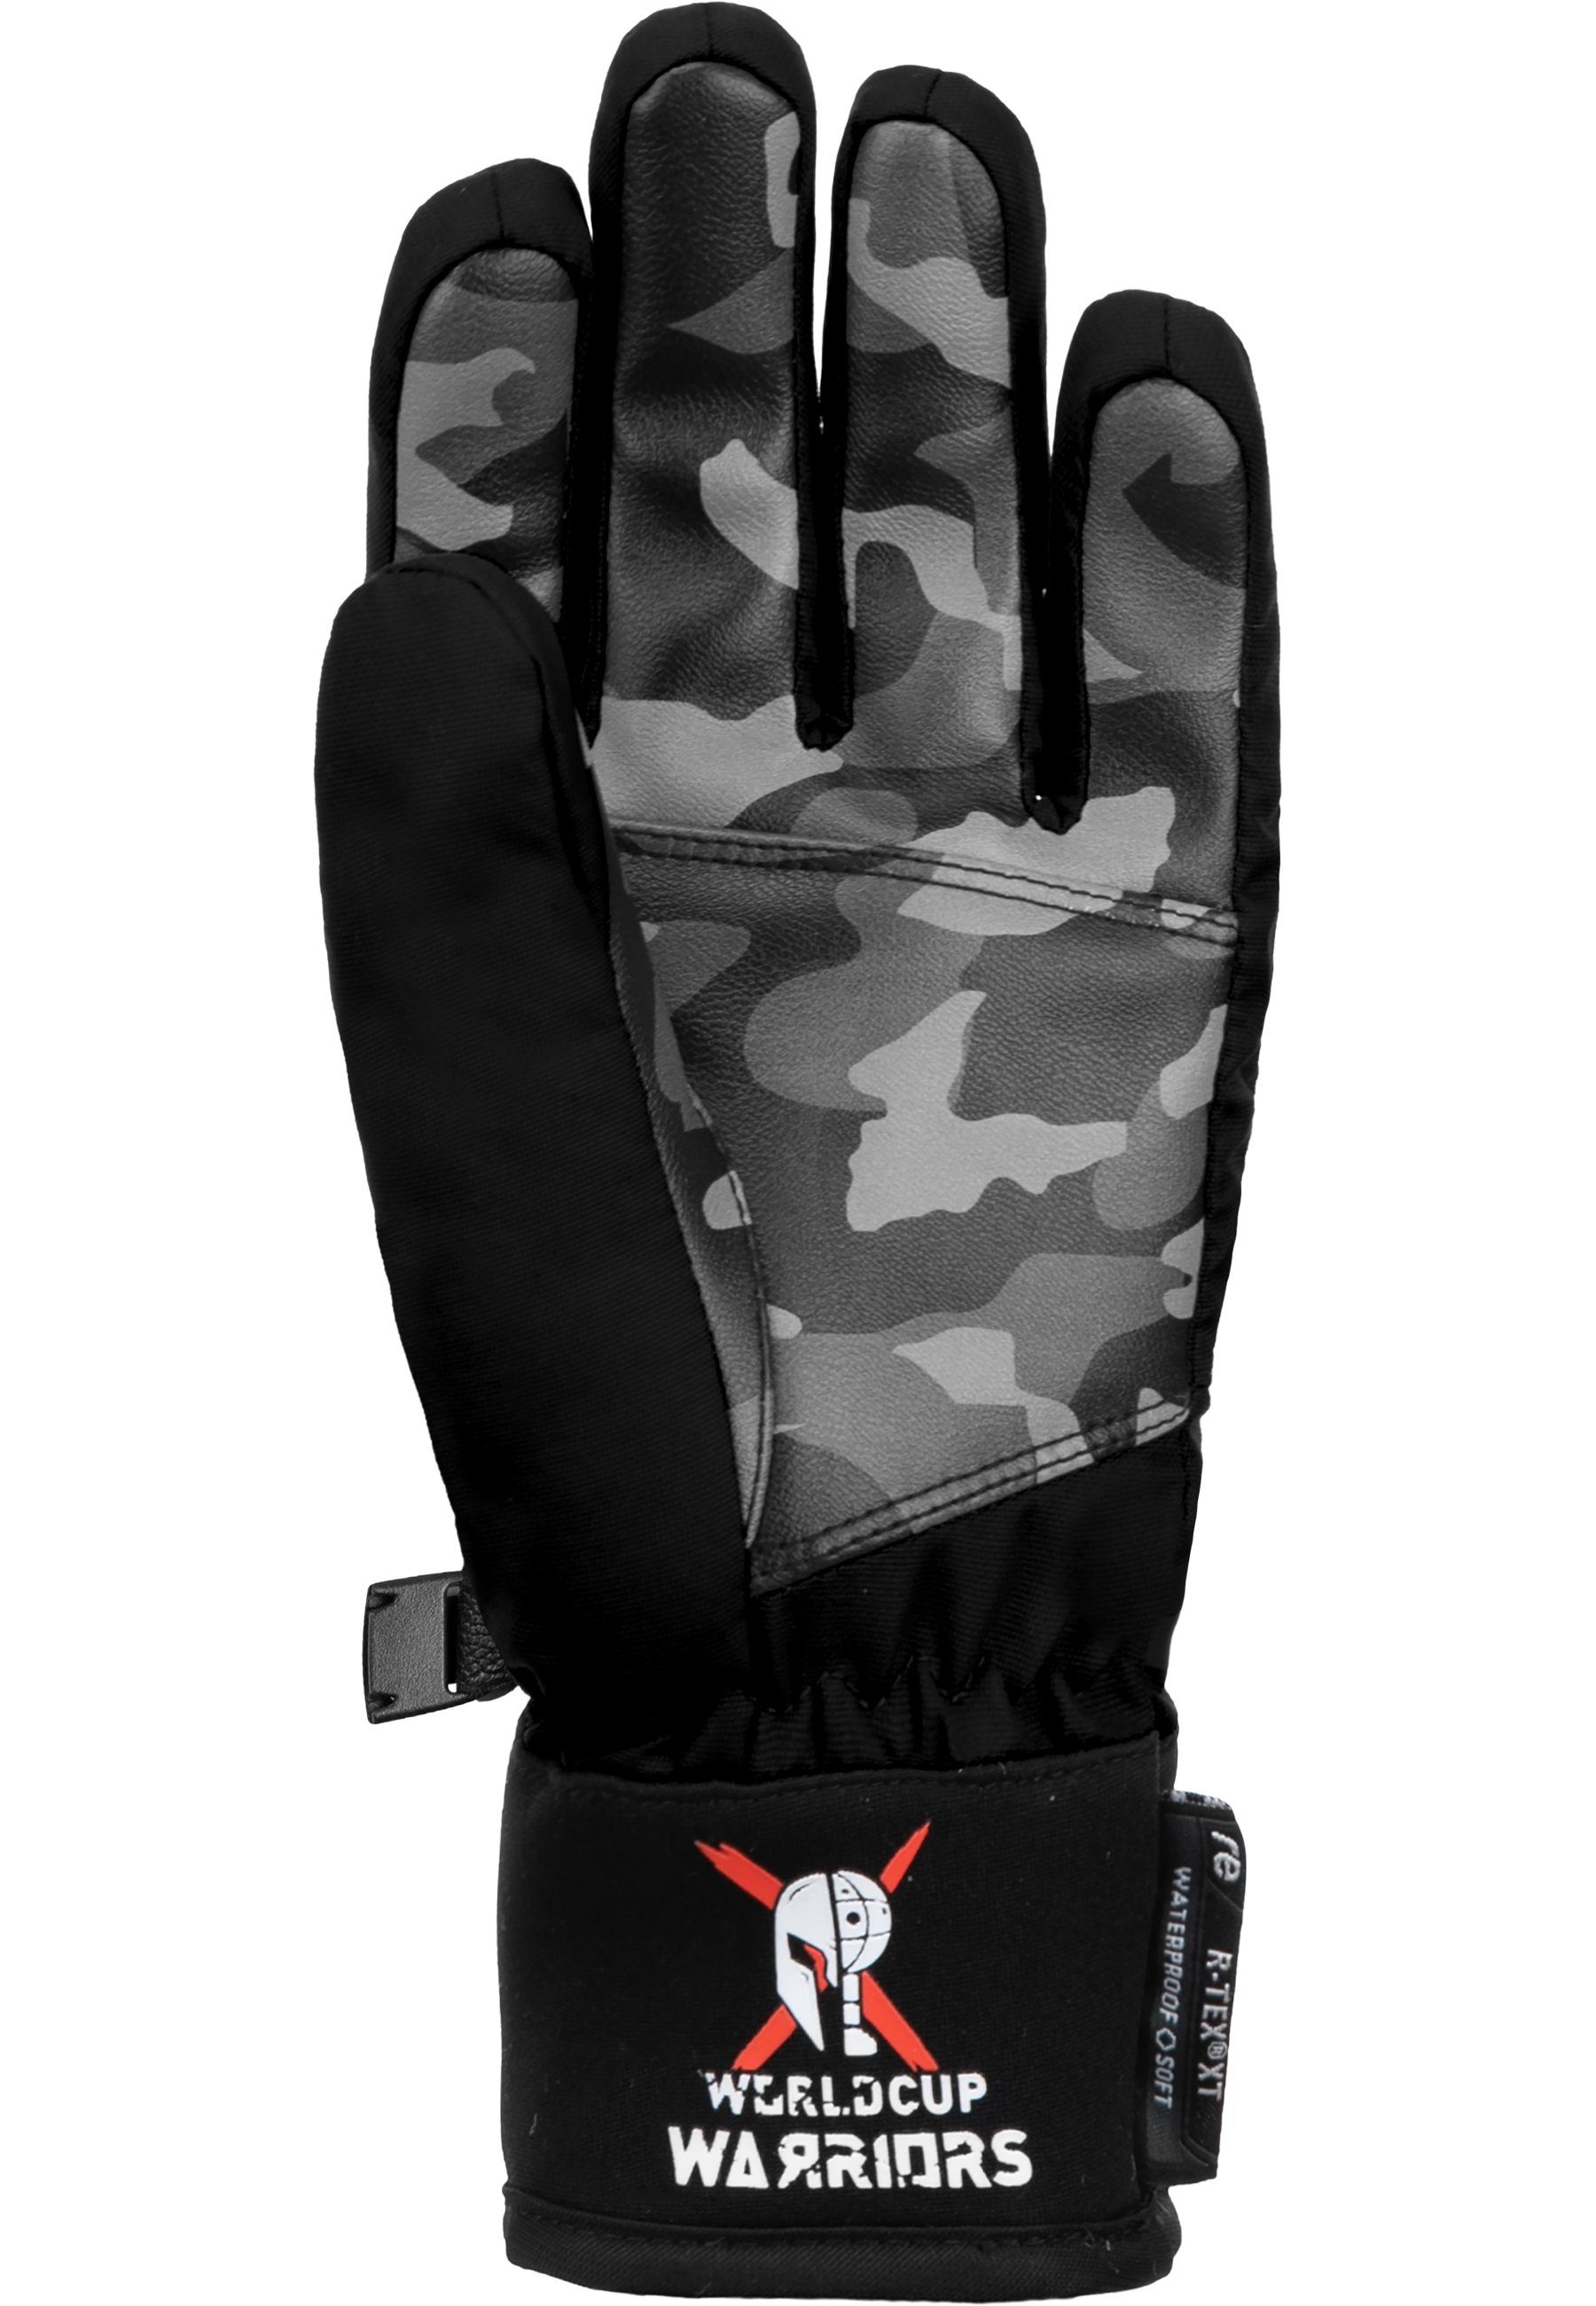 Warrior wasserdichter R-TEX Skihandschuhe XT schwarz-grau Reusch Junior mit Funktionsmembran